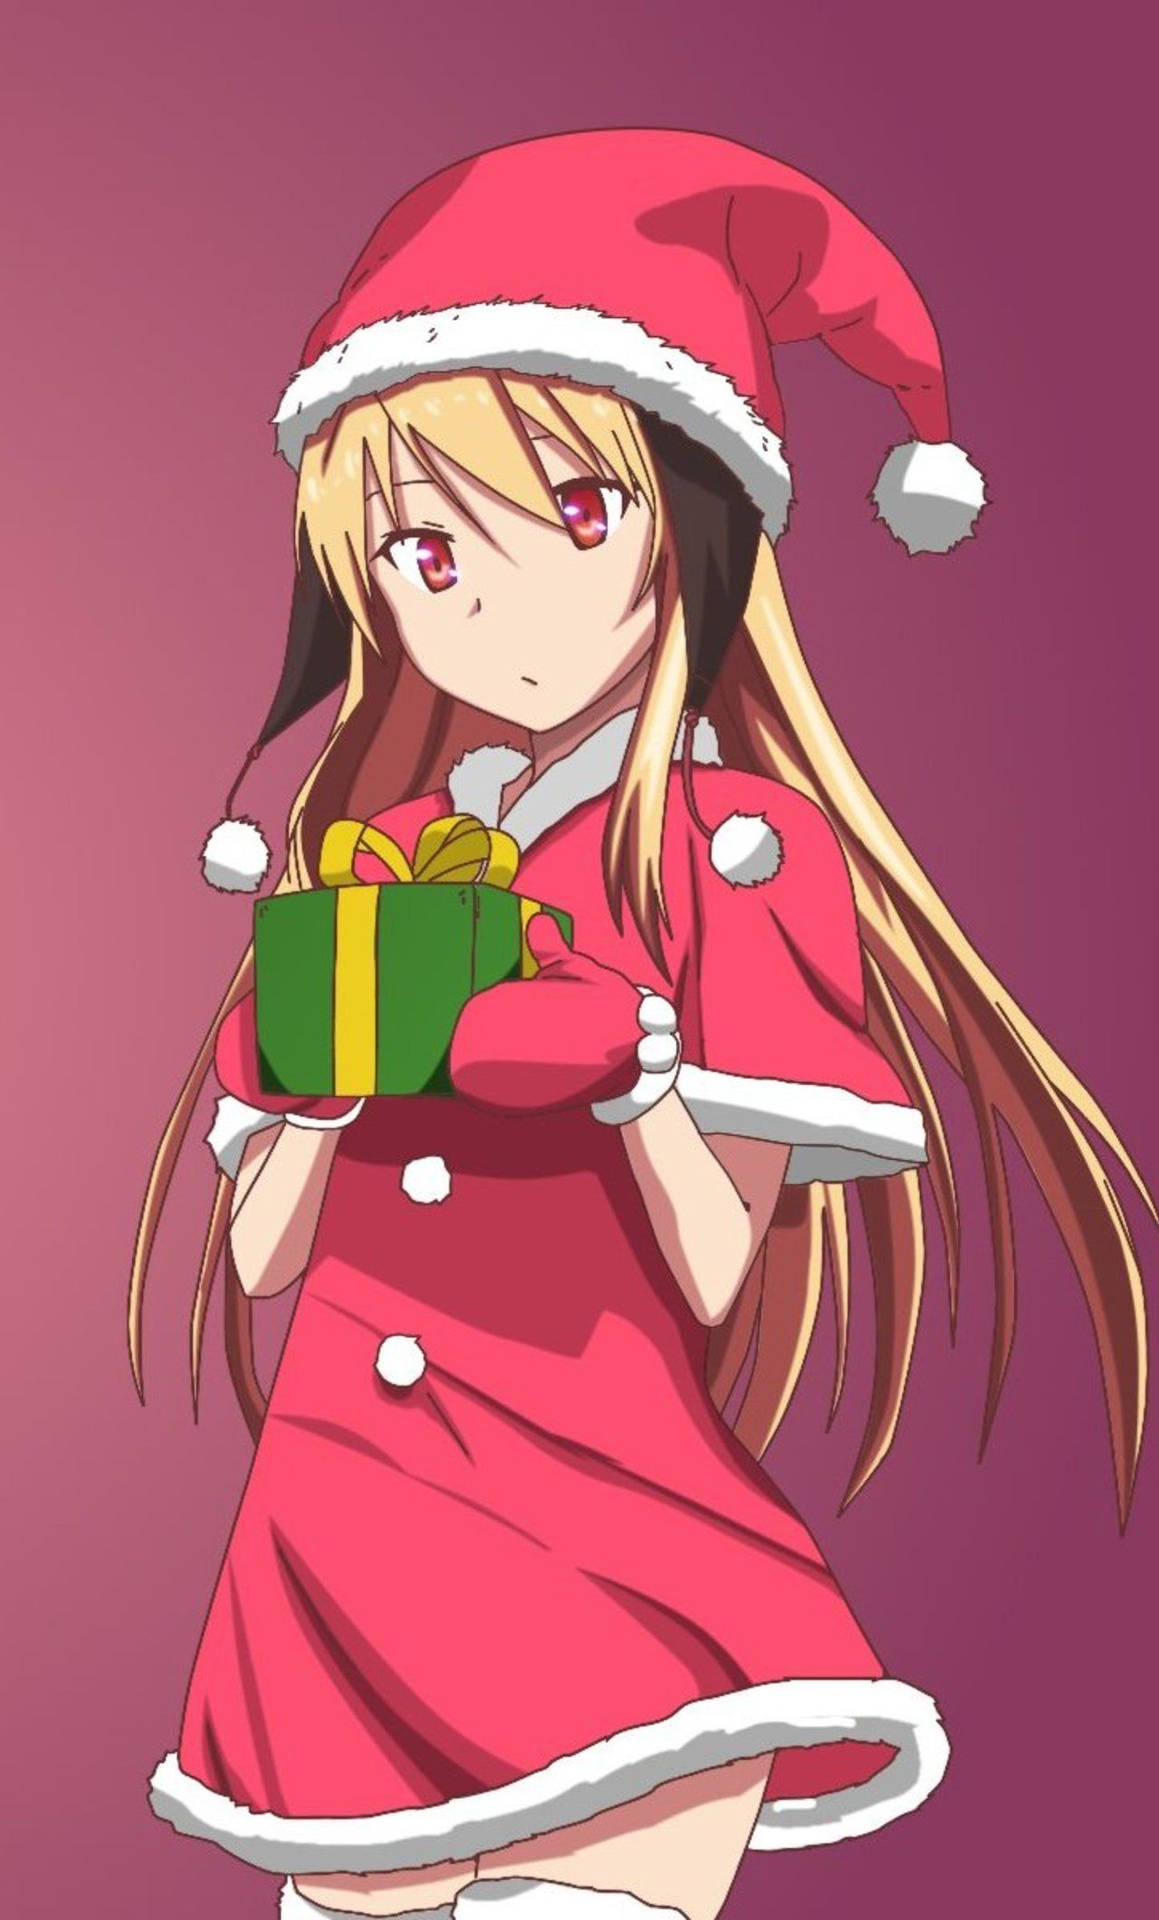 Free Anime Girl Christmas Wallpaper Downloads, [100+] Anime Girl Christmas  Wallpapers for FREE 